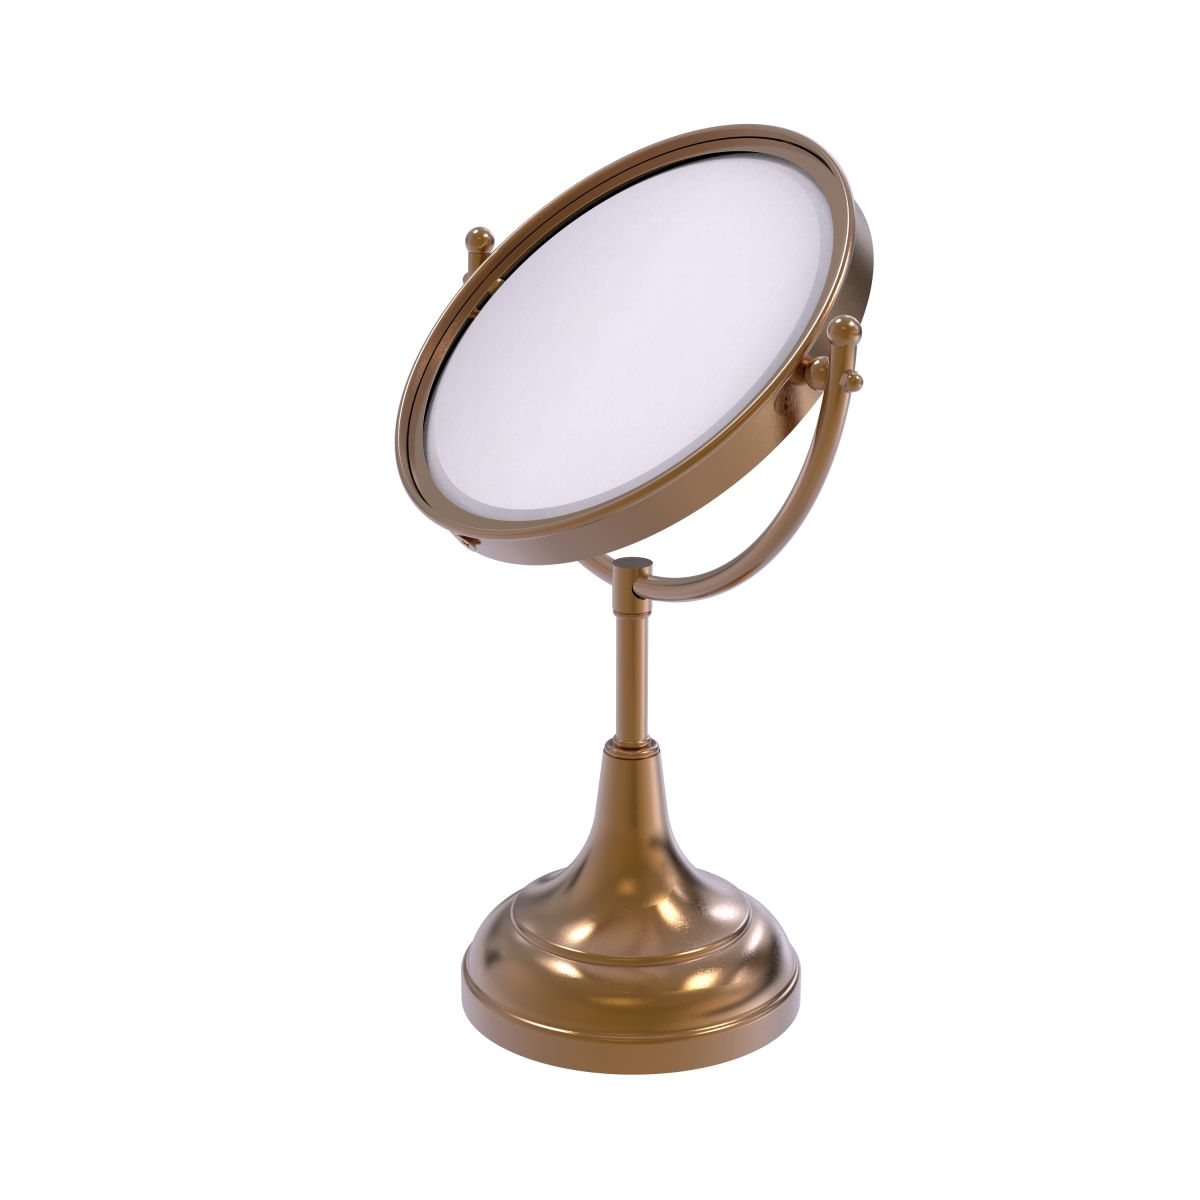 Dm-2-3x-bbr 8 In. Vanity Top Make-up Mirror 3x Magnification, Brushed Bronze